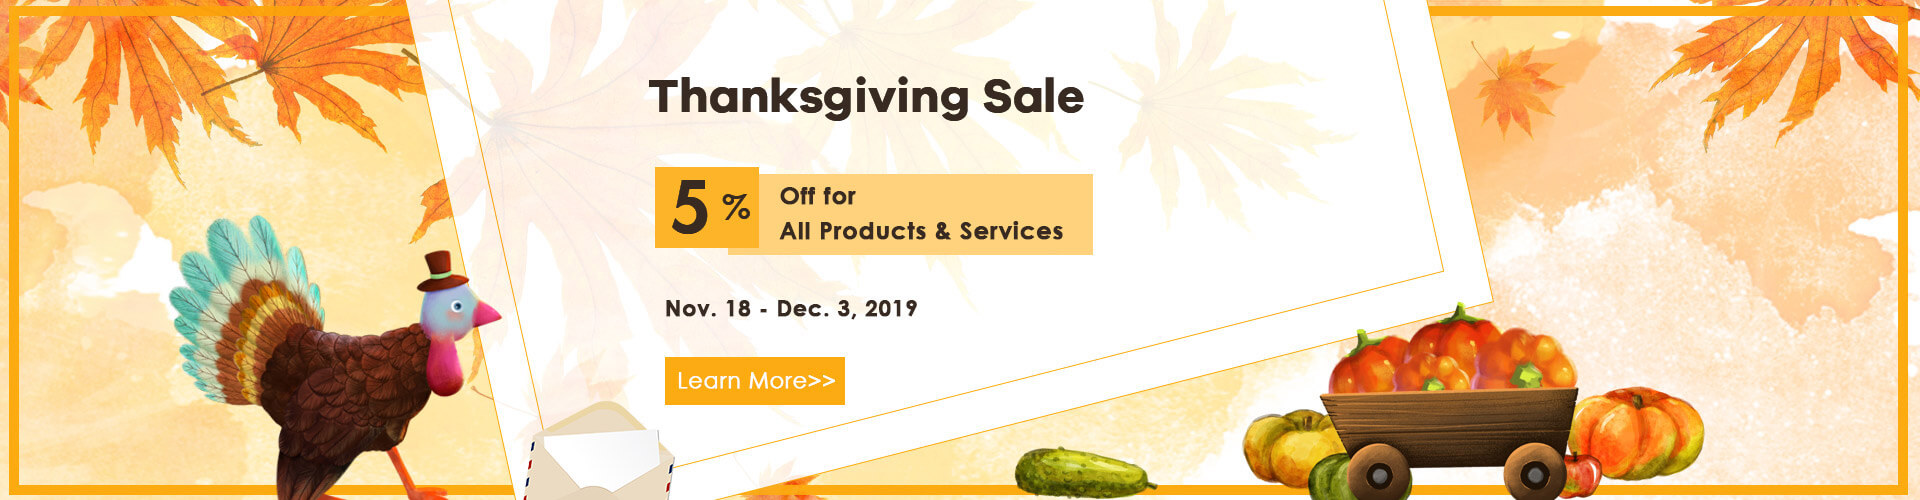 Thanksgiving Sale 2019